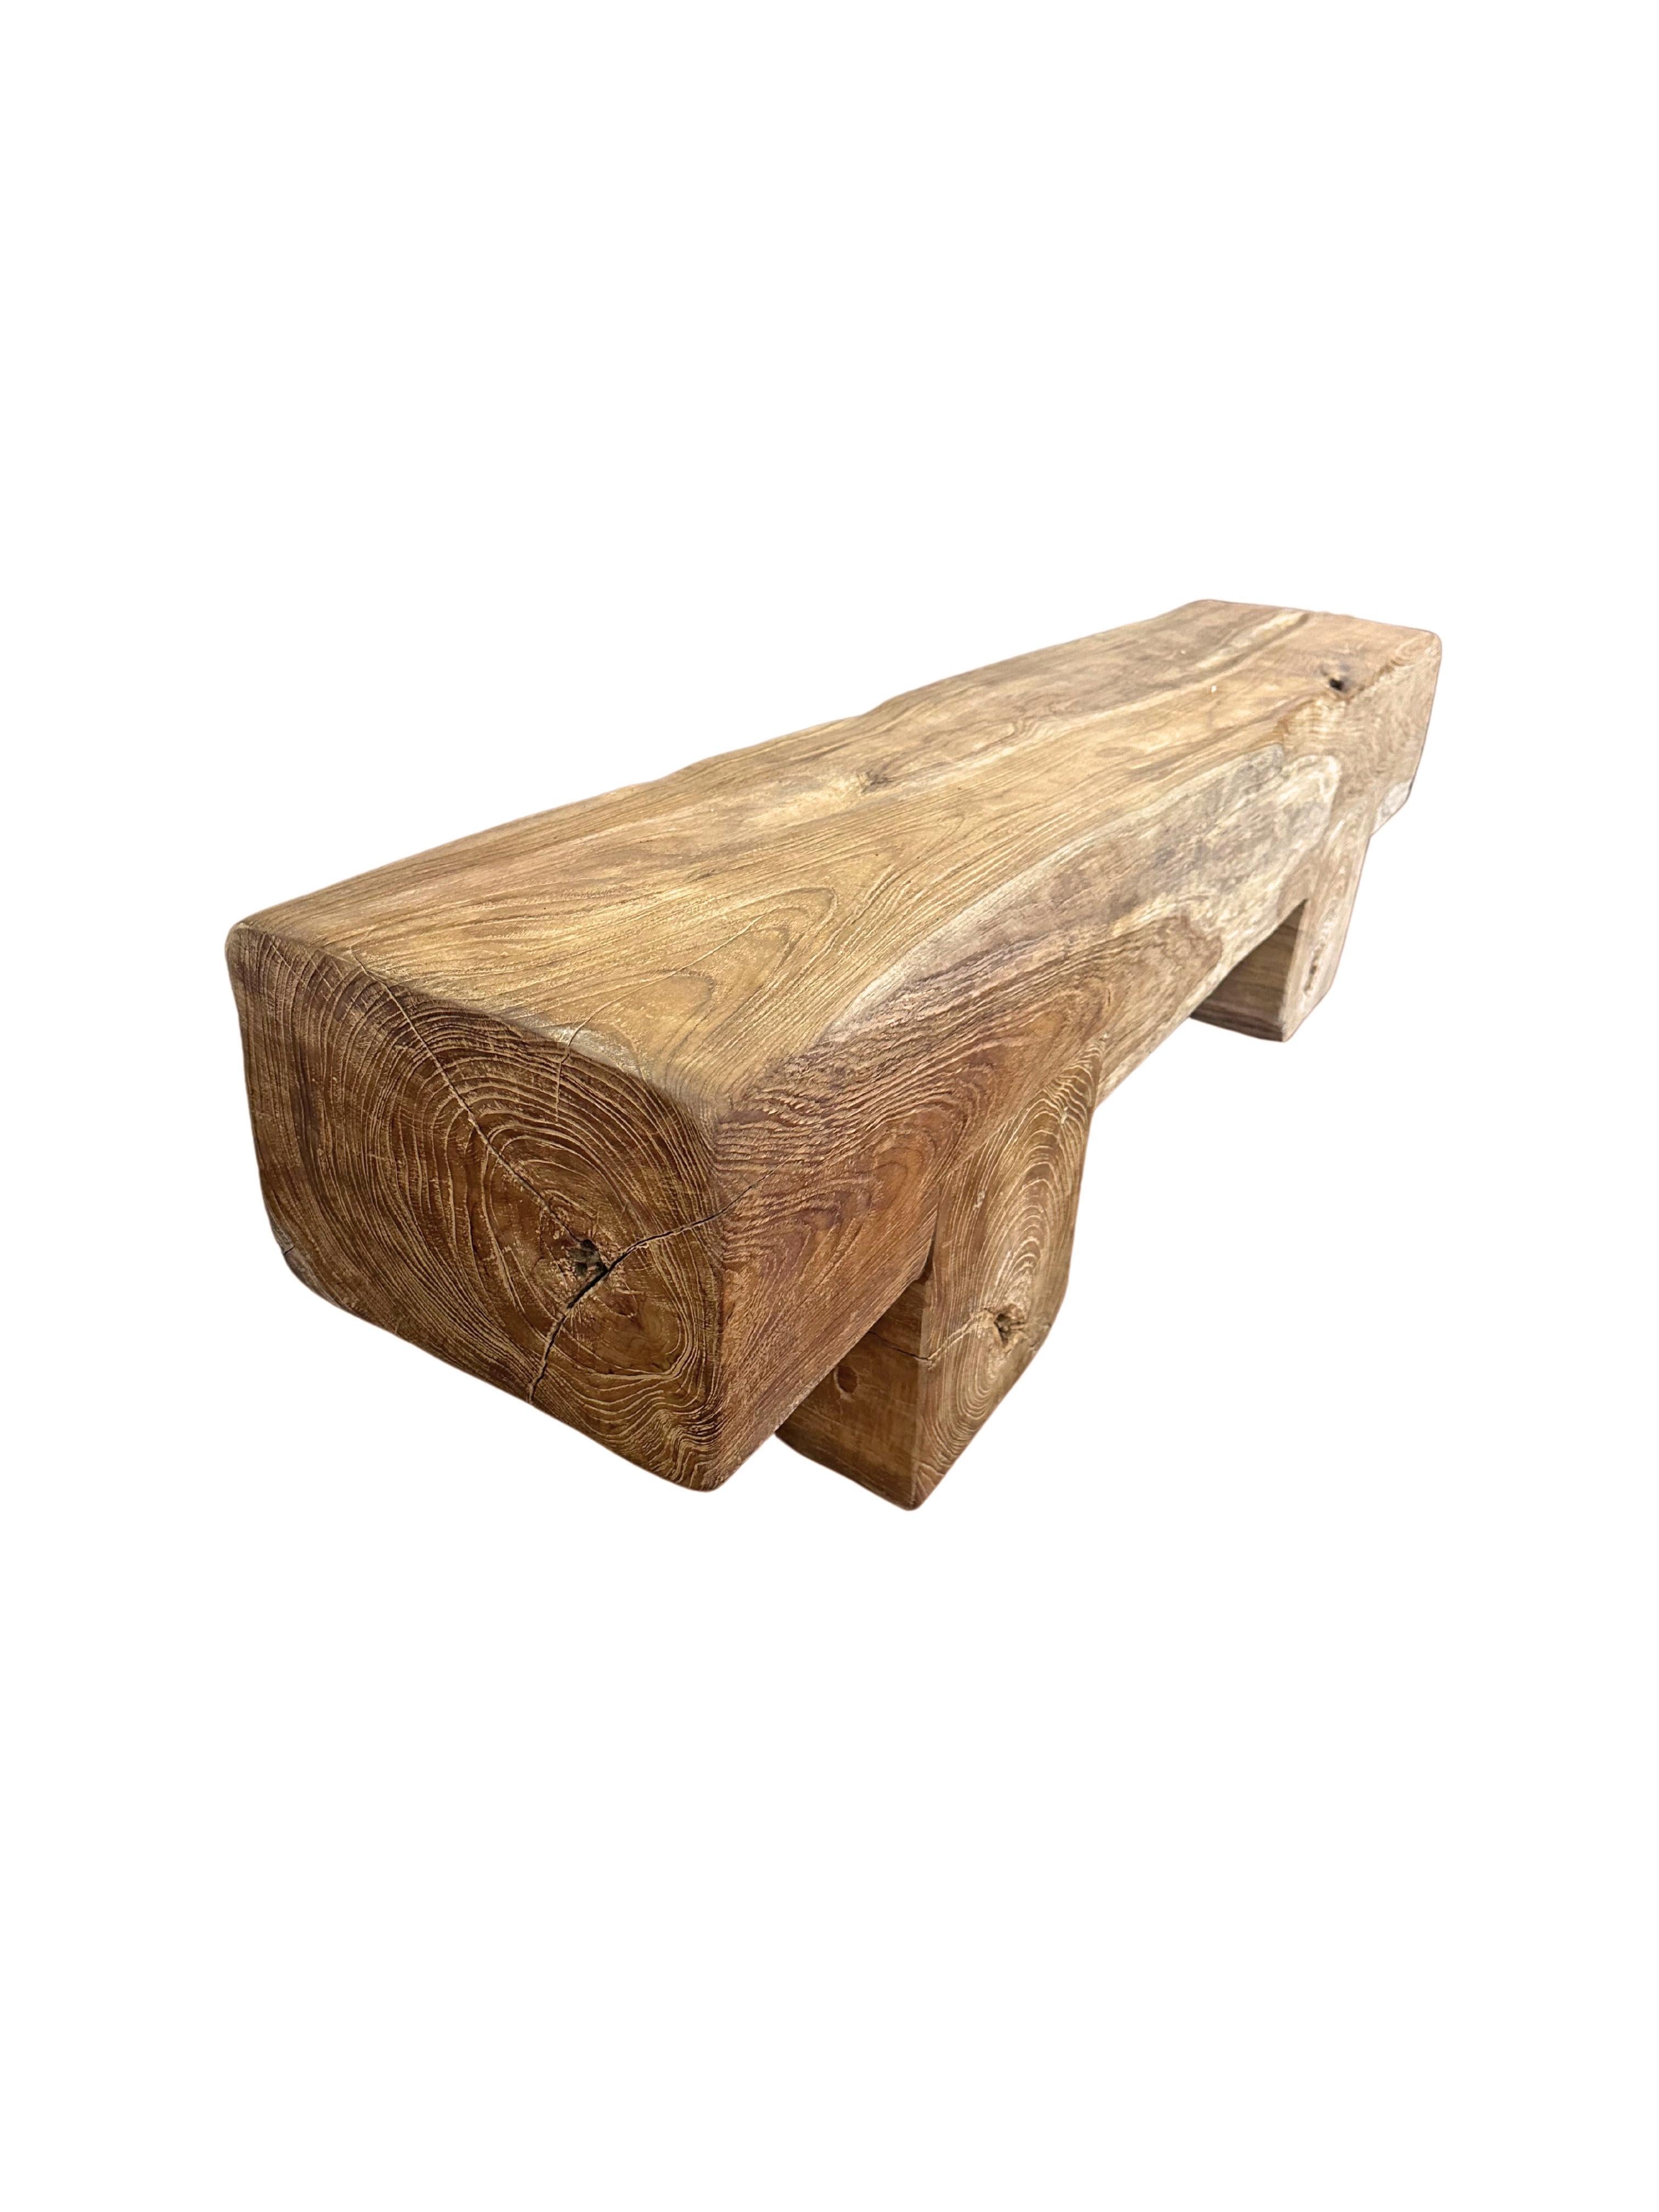 Other Solid Teak Wood Sculptural Bench Modern Organic For Sale